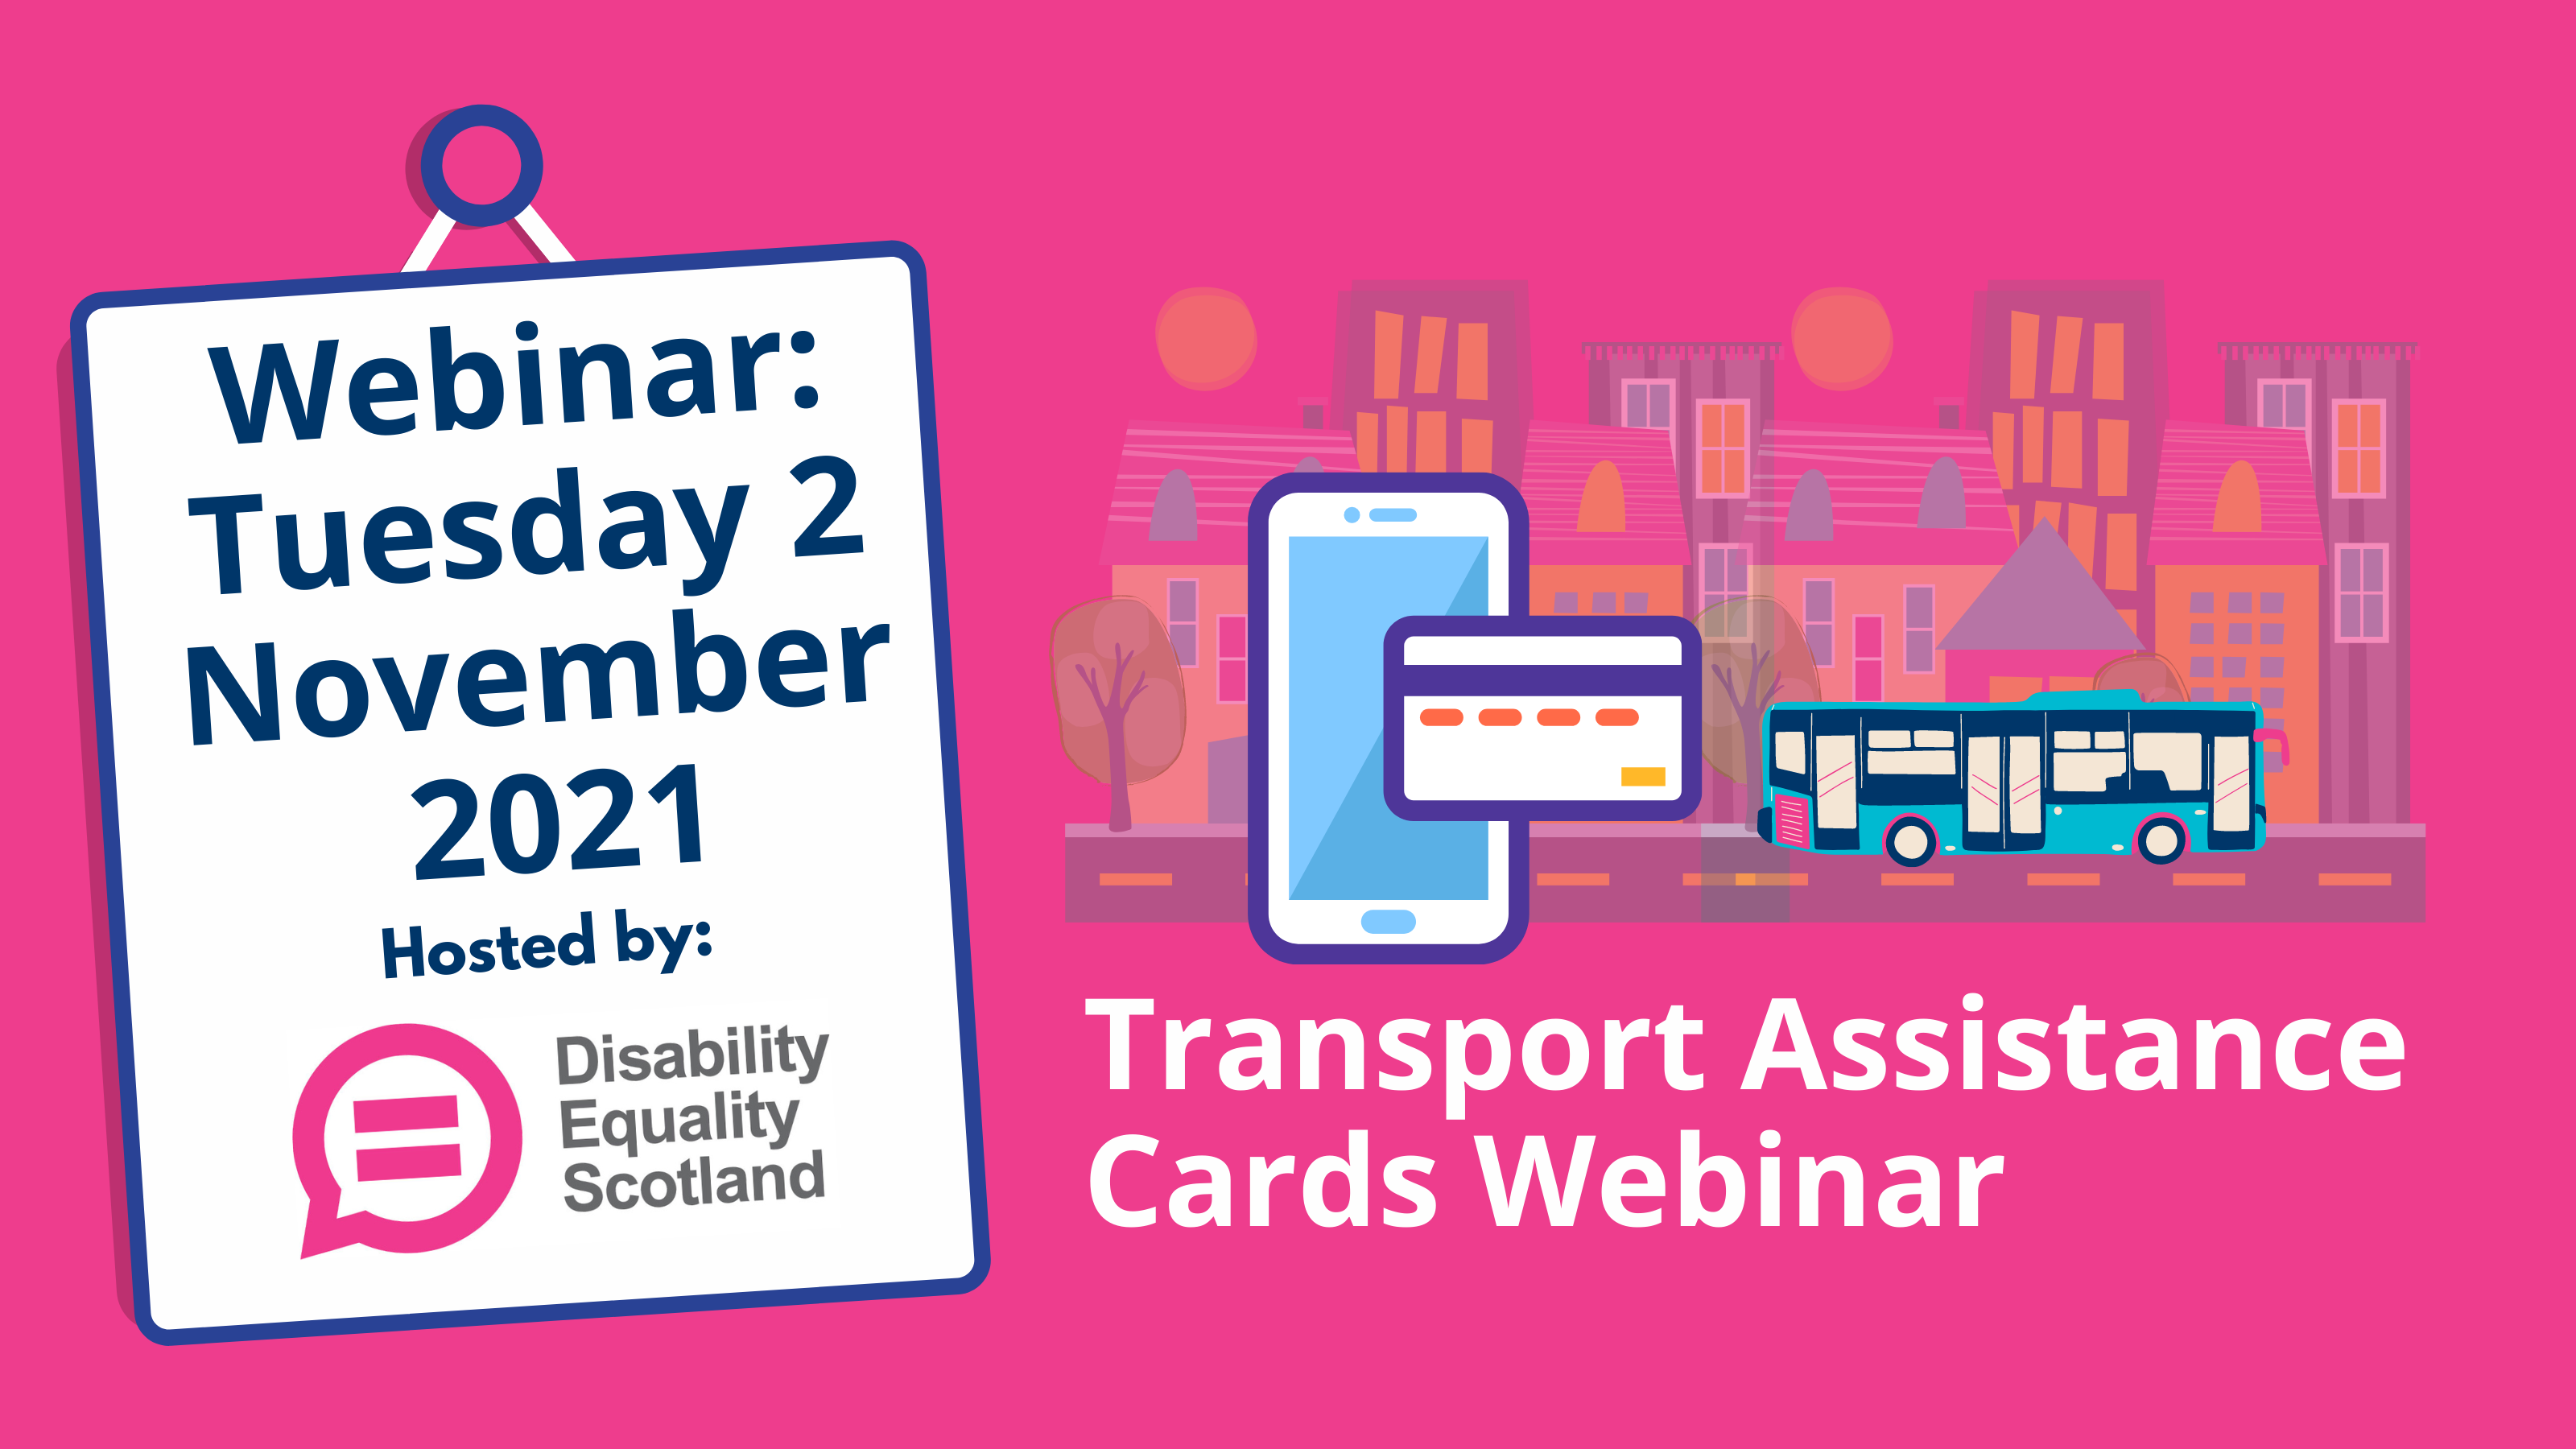 Transport Assistance Cards webinar Tuesday 2 November 2021